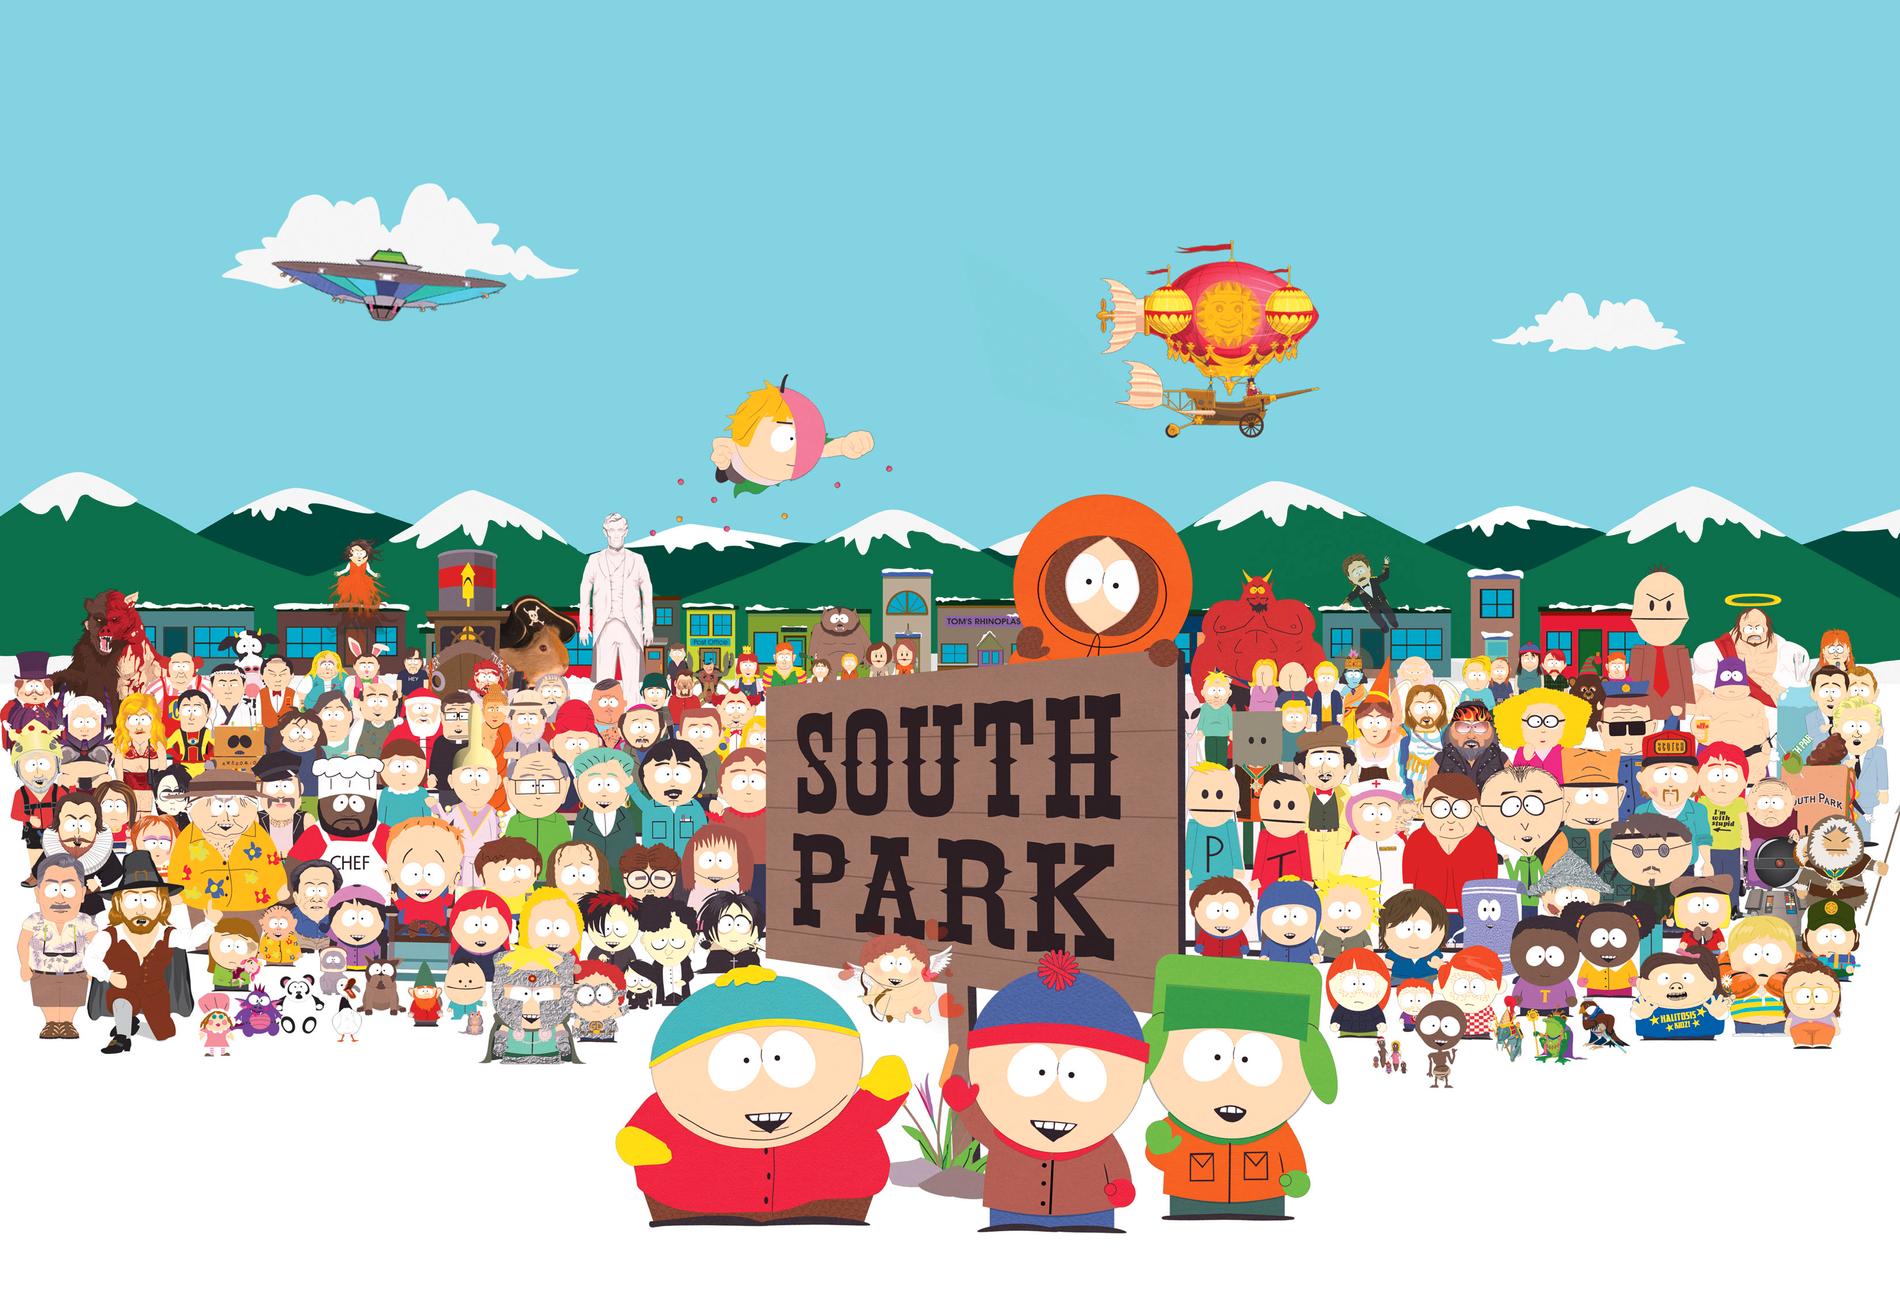 ”South Park”.